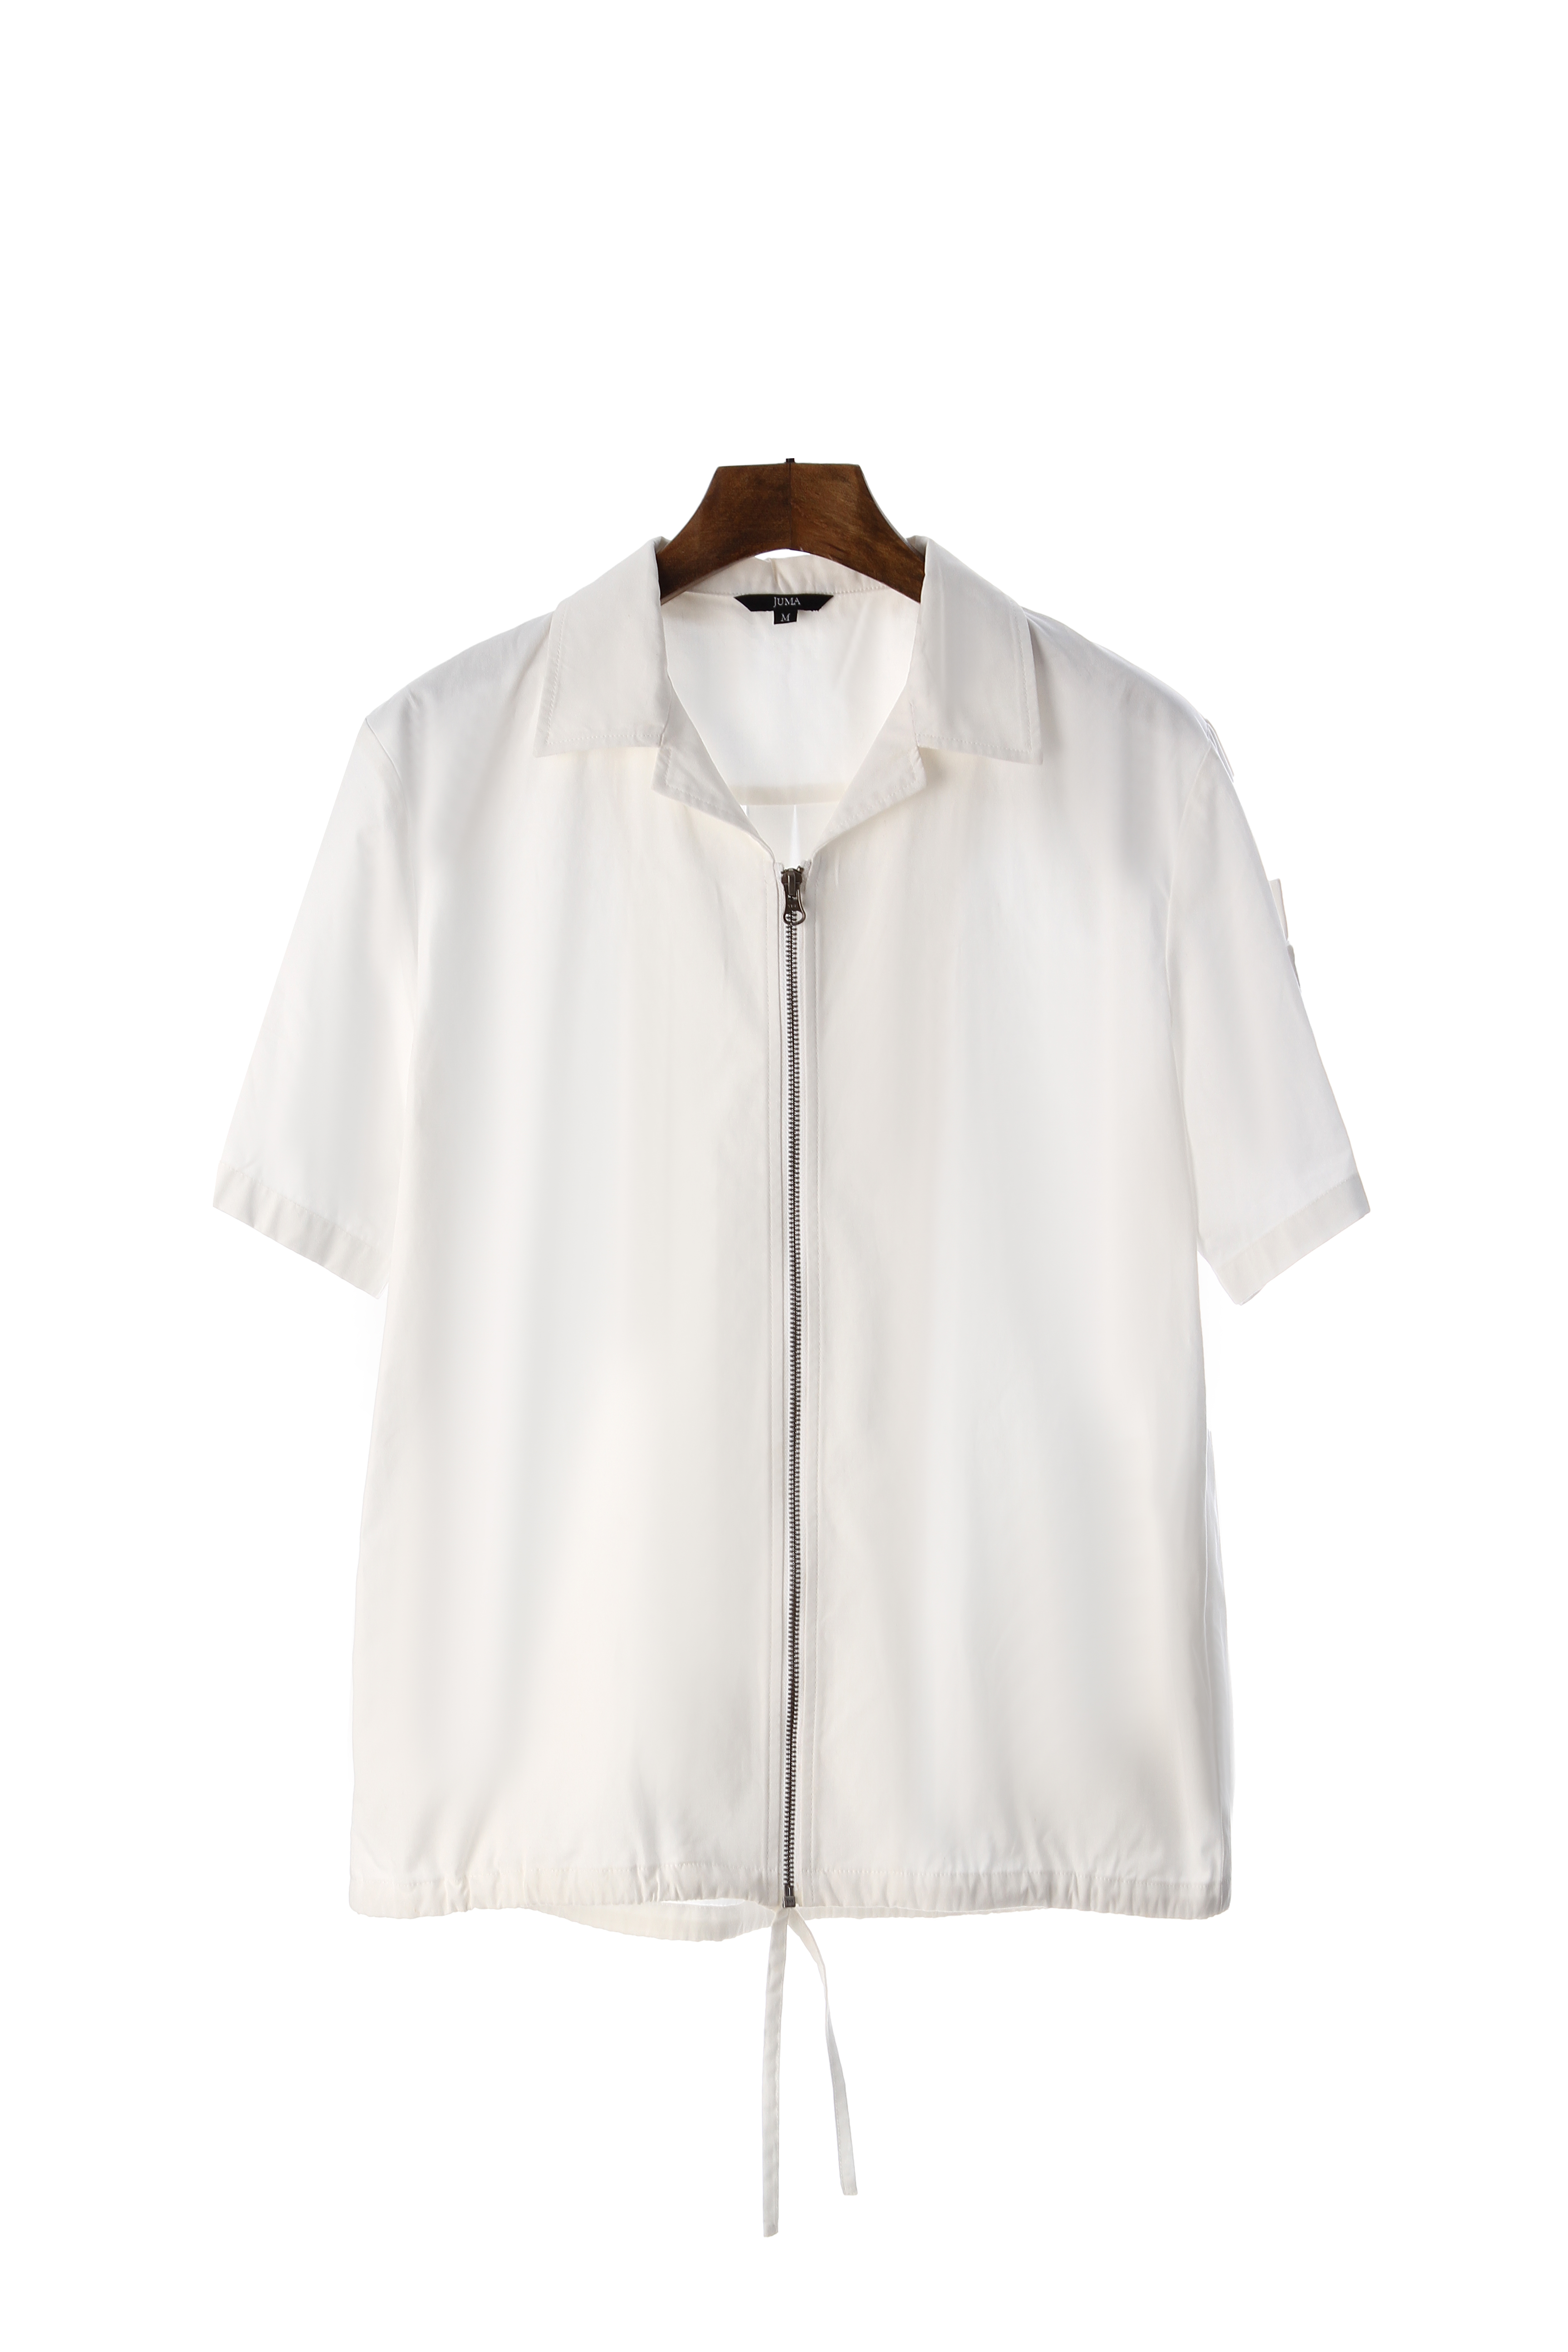 JUMA 拉链衬衫-4个回收水瓶-白色｜JUMA Zip Up Shirt - 4 Recycled Water Bottles - White